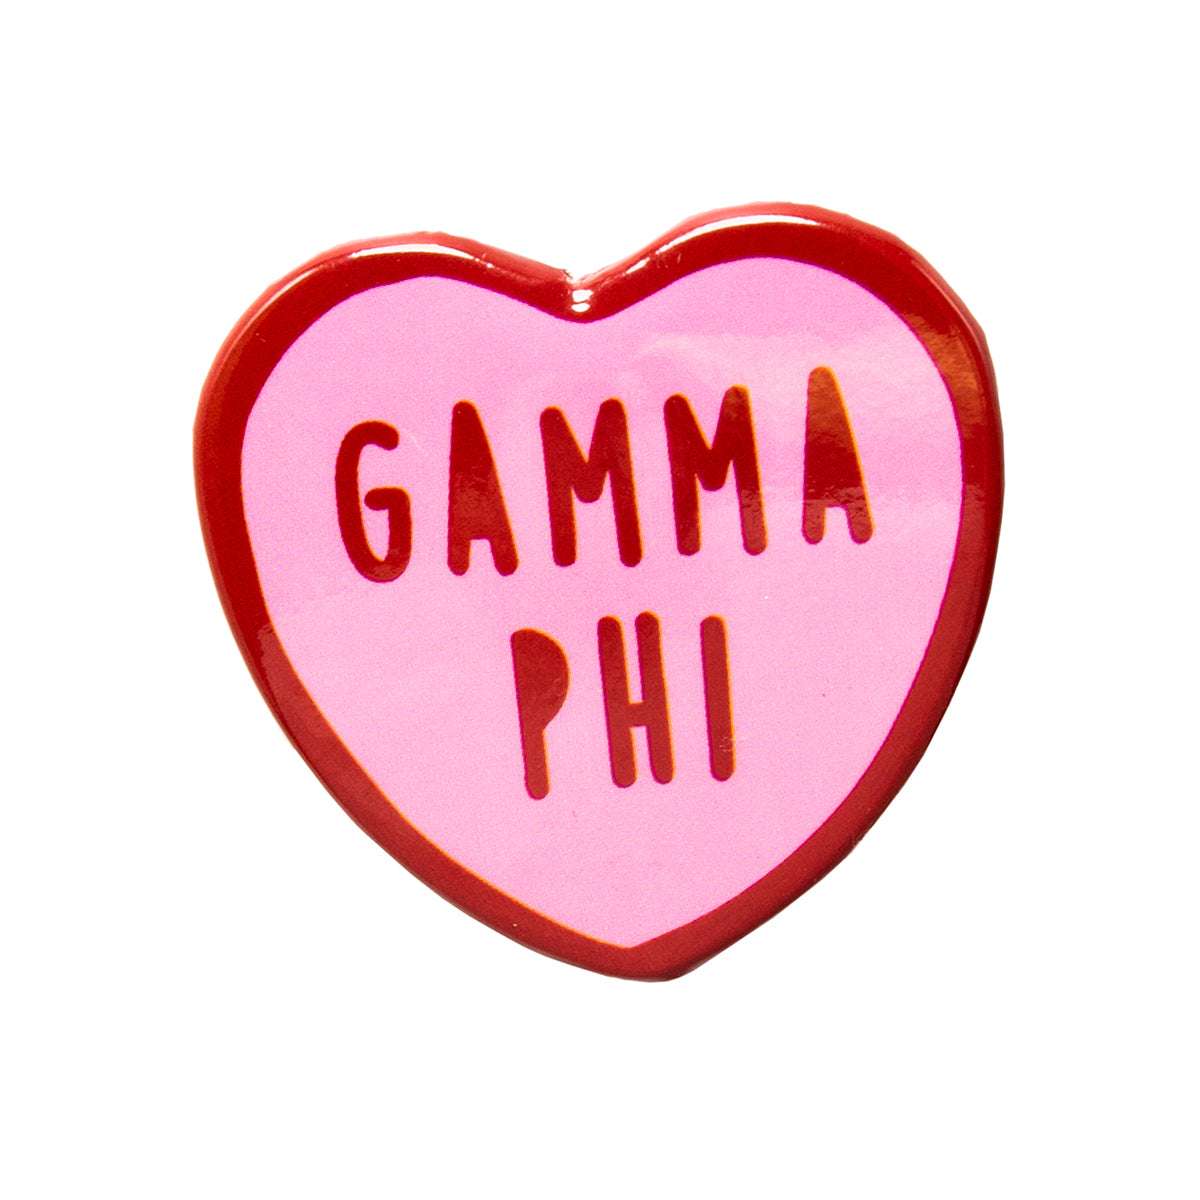 Gamma Phi Beta Heart Button